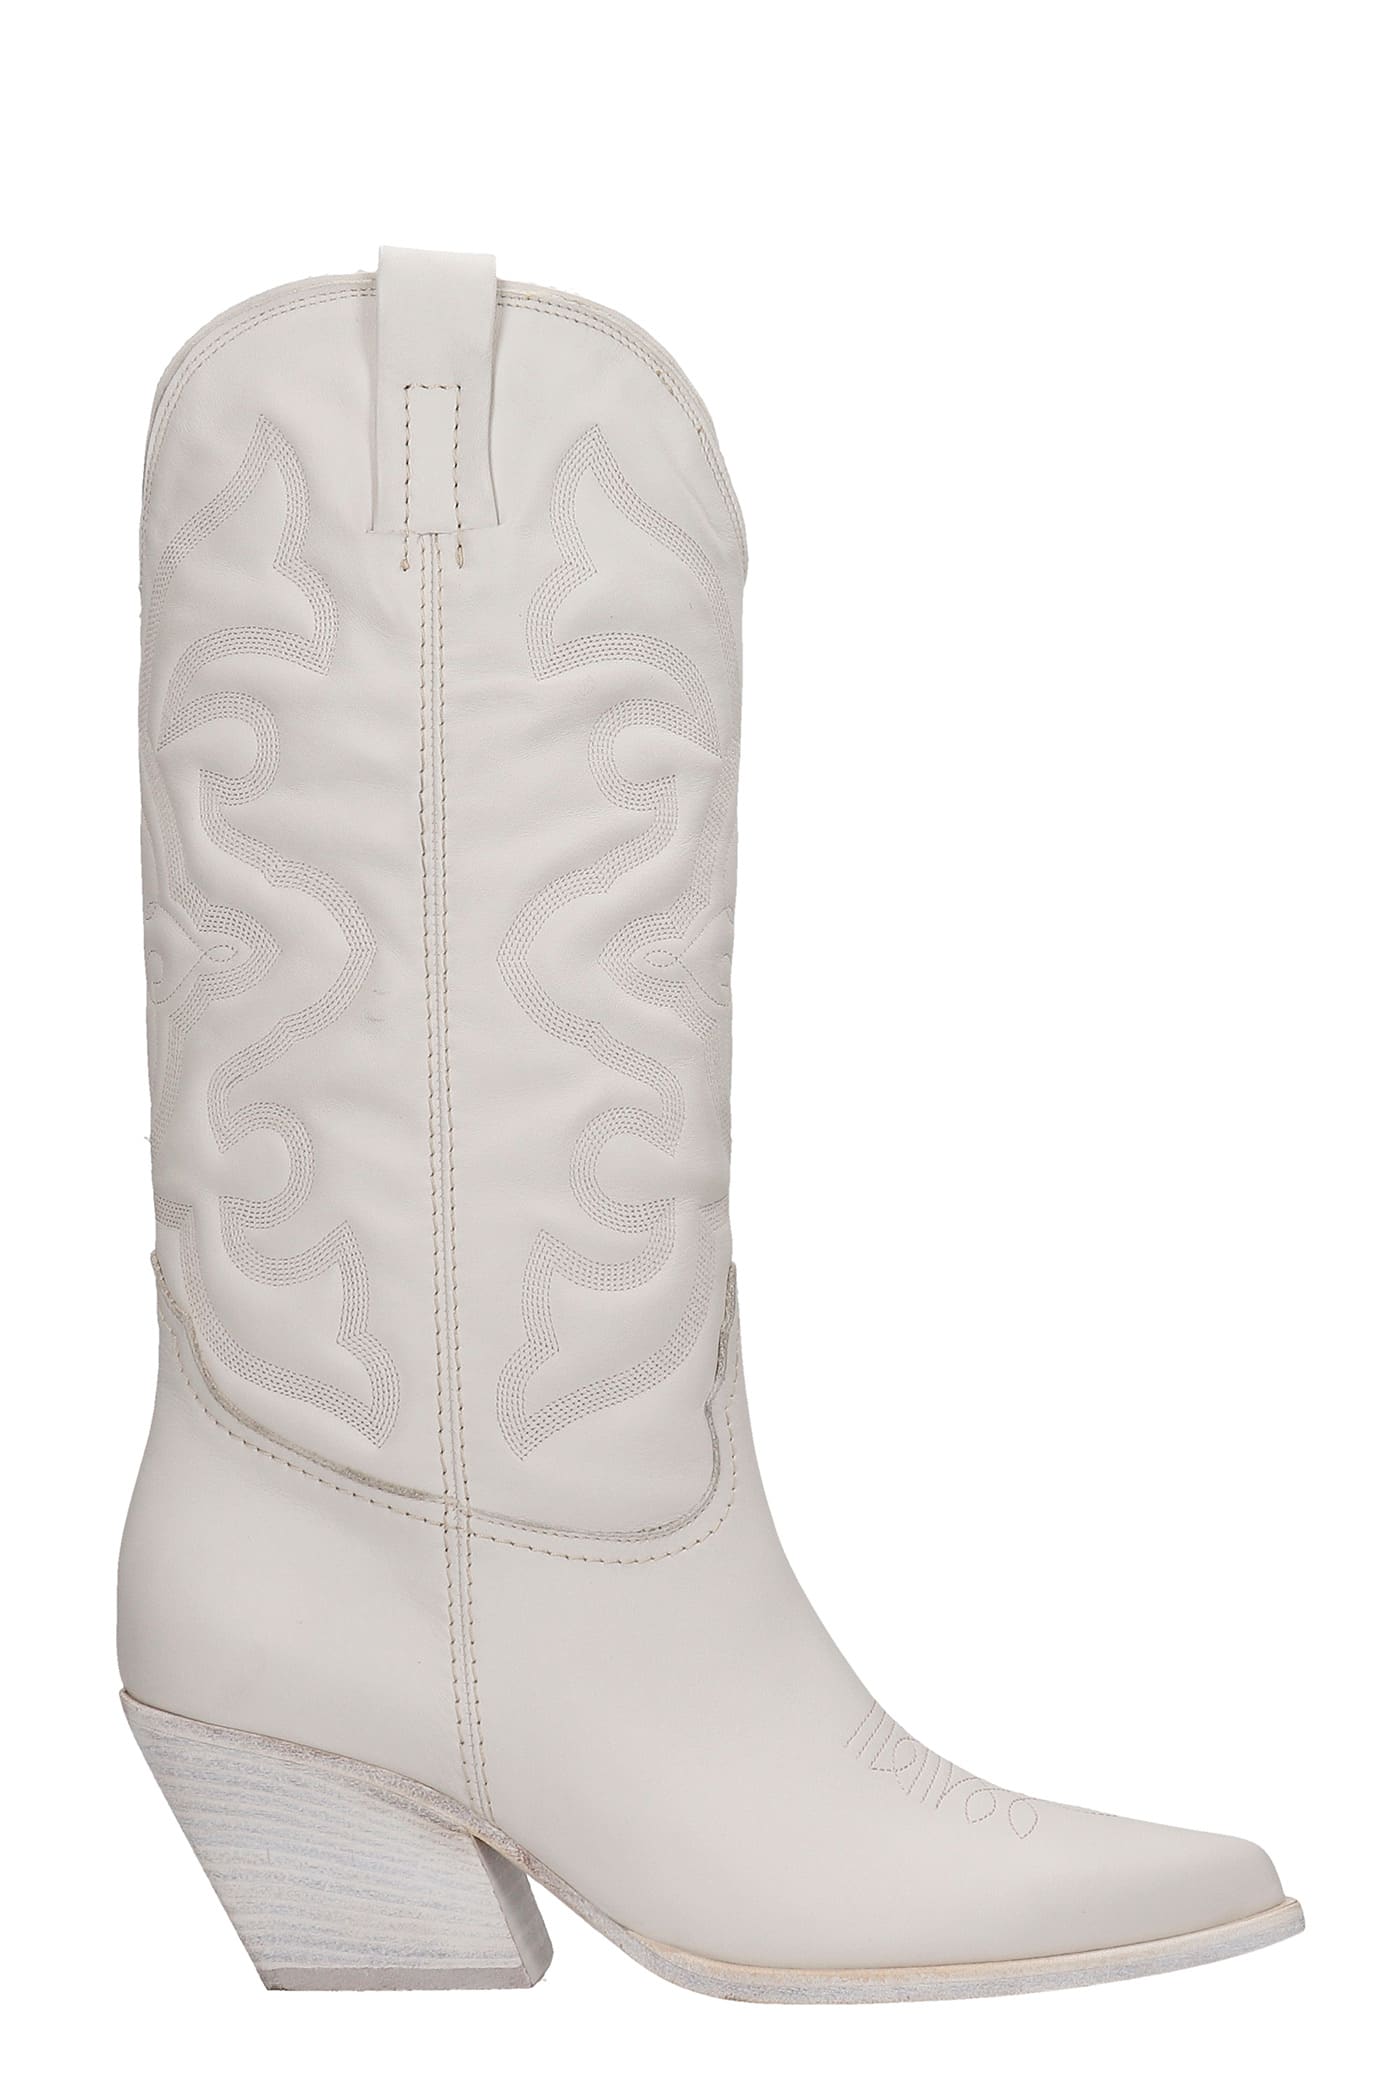 Elena Iachi Texan Boots In White Leather